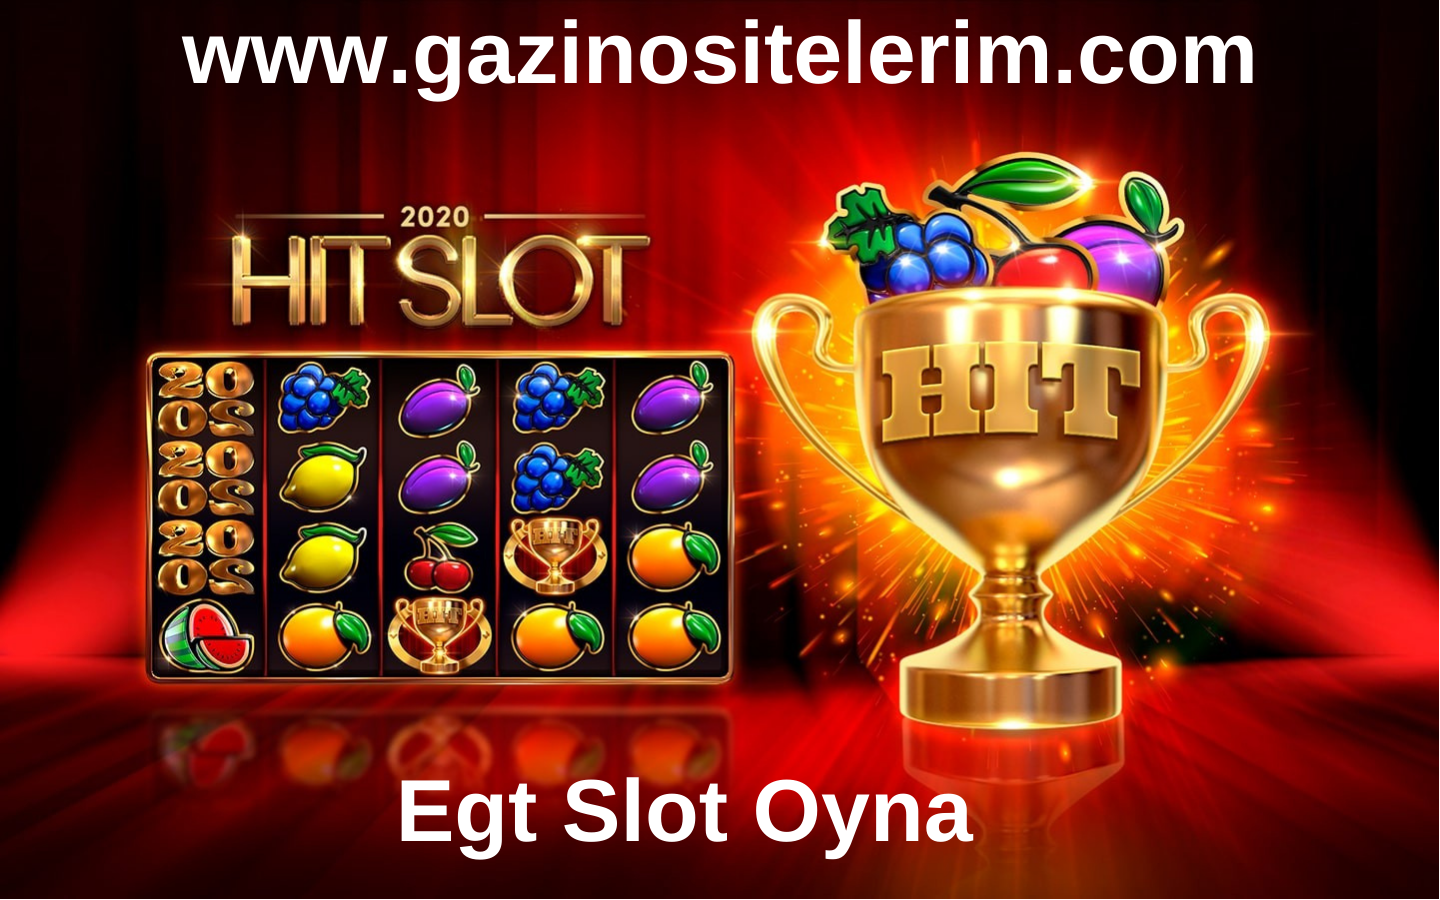 Egt Slot Oyna